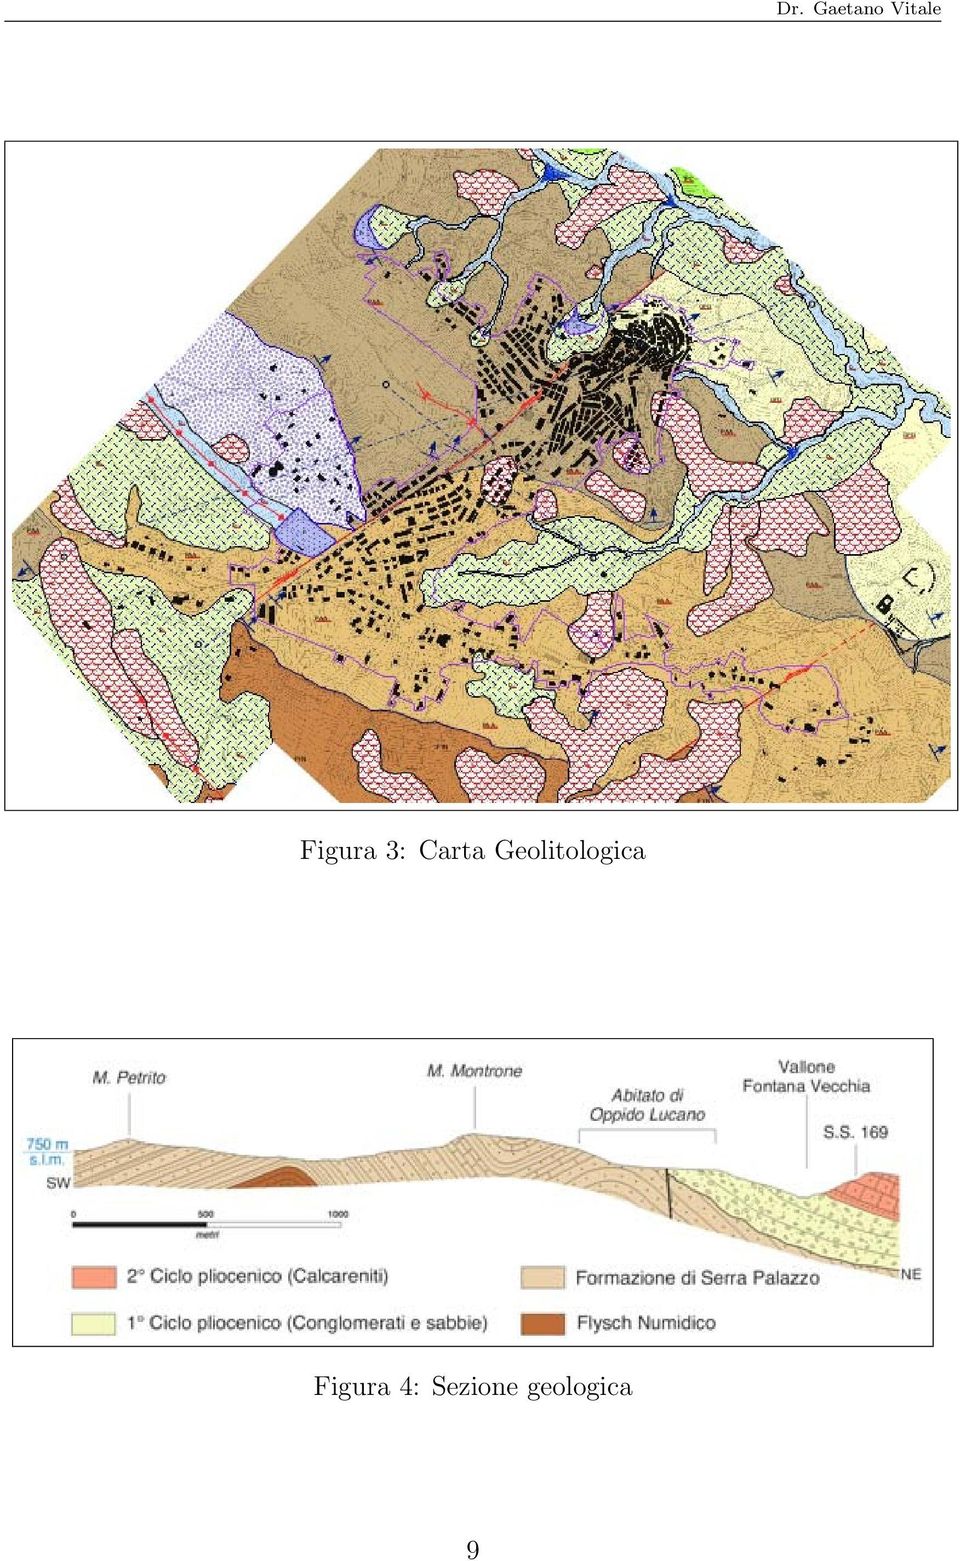 Geolitologica